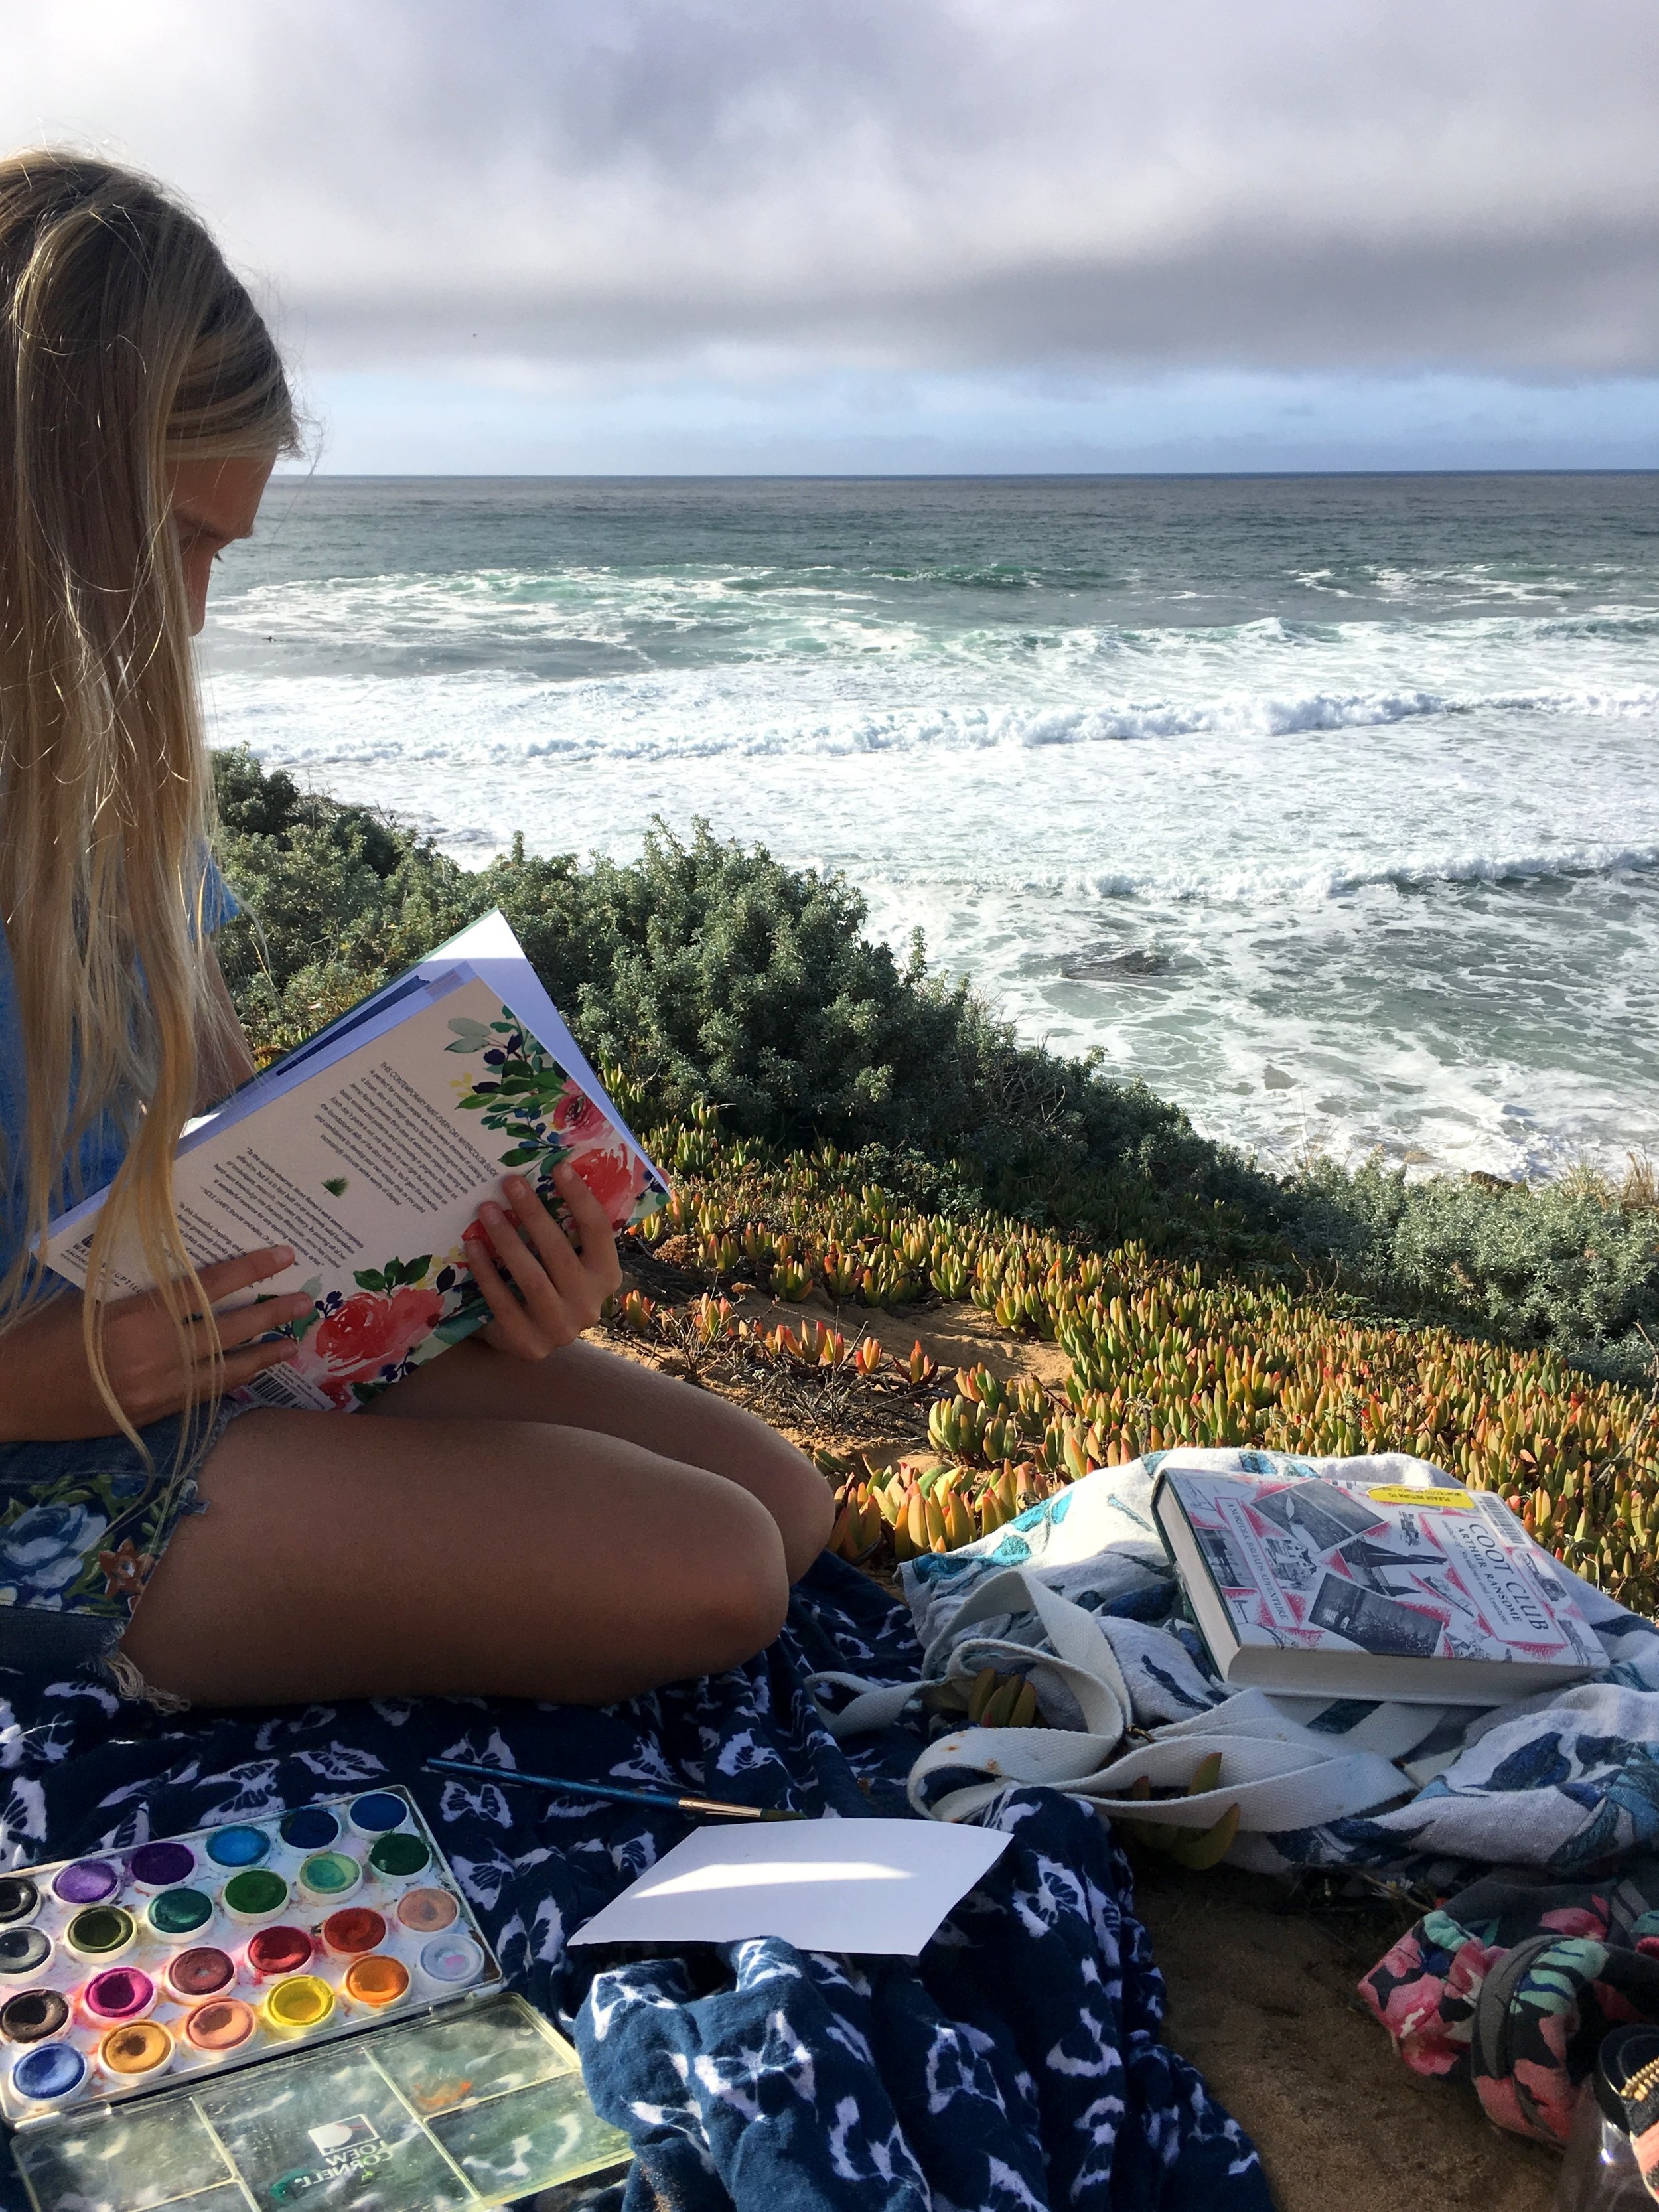 Everyday Watercolor Seashores on Apple Books